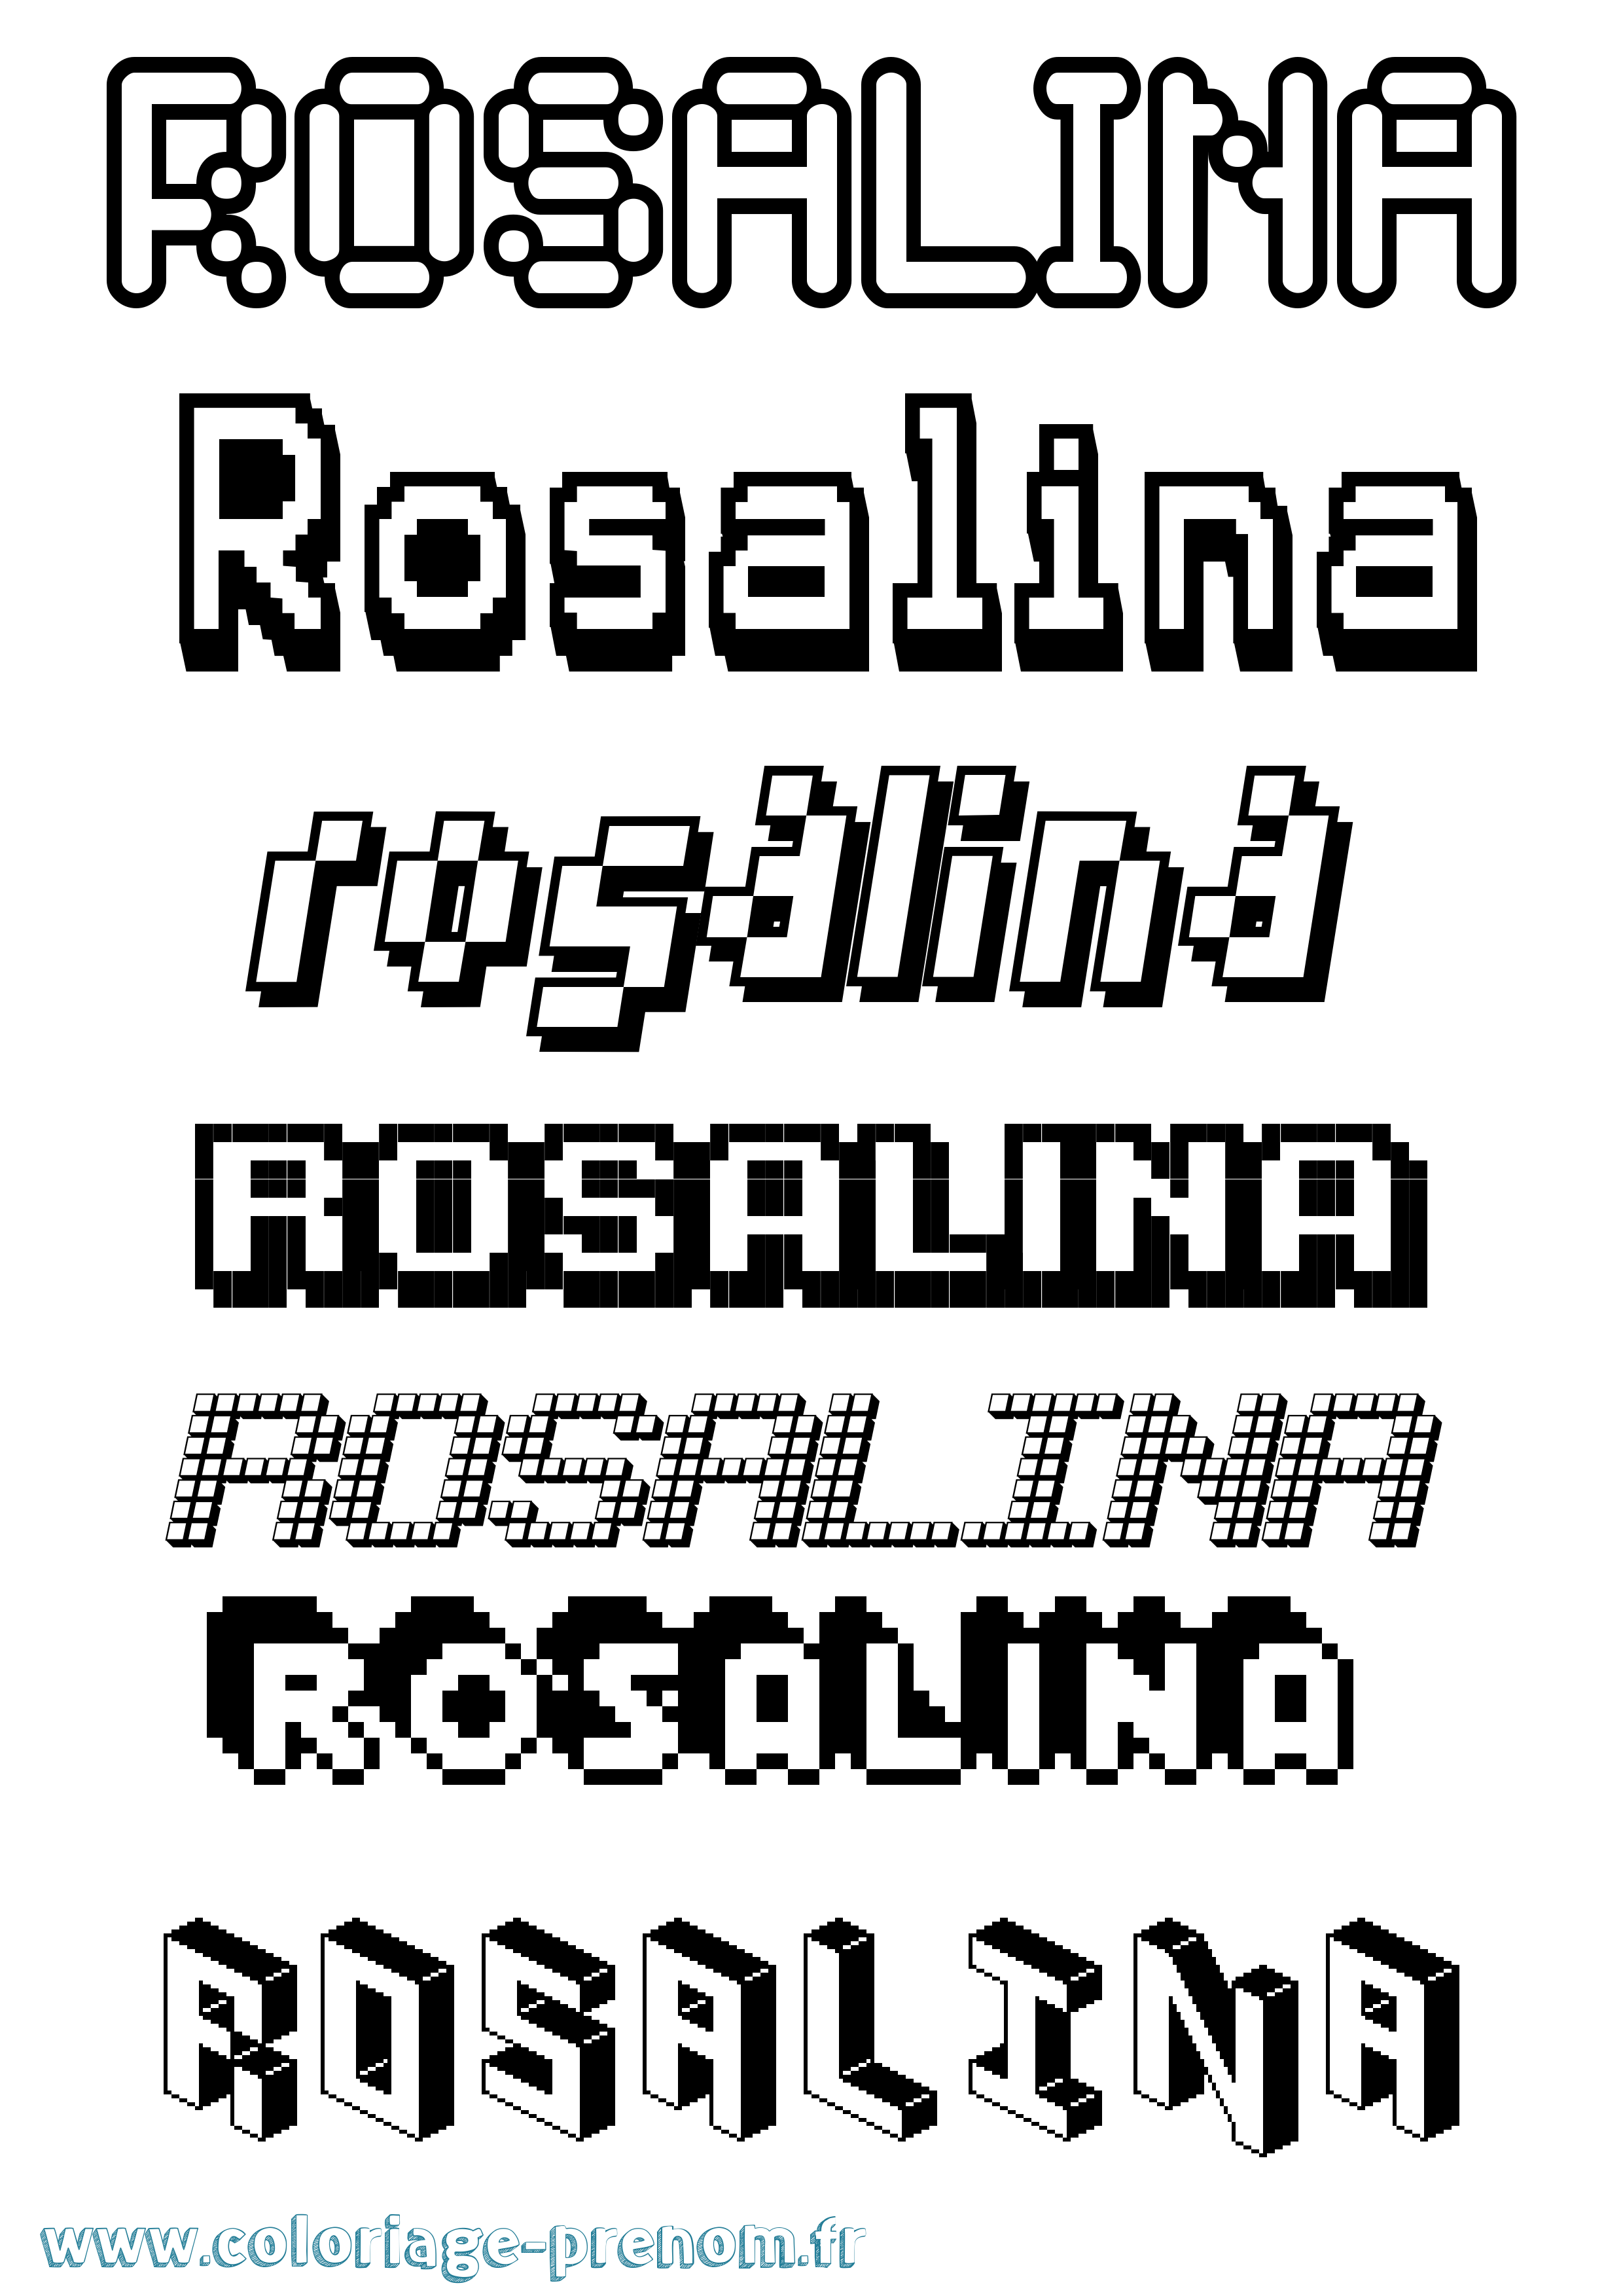 Coloriage prénom Rosalina Pixel